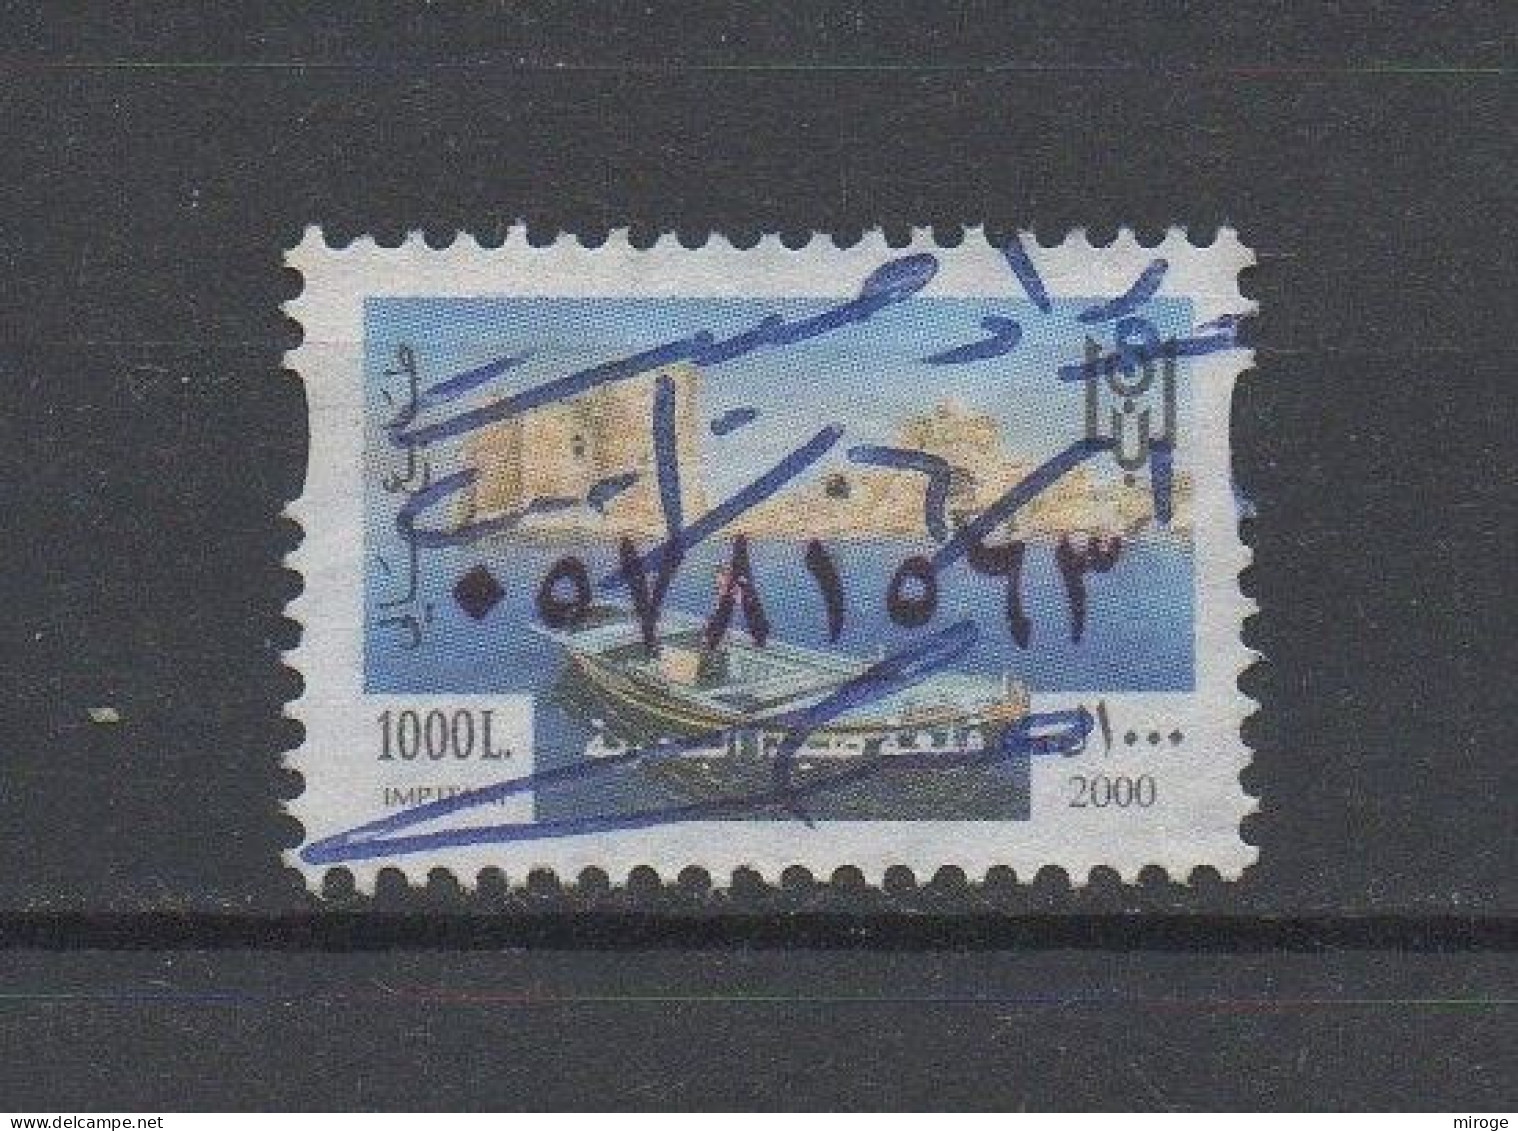 Saida Fortress 2000 1000LL Used Fiscal Revenue Stamp Lebanon , Liban Libano - Lebanon